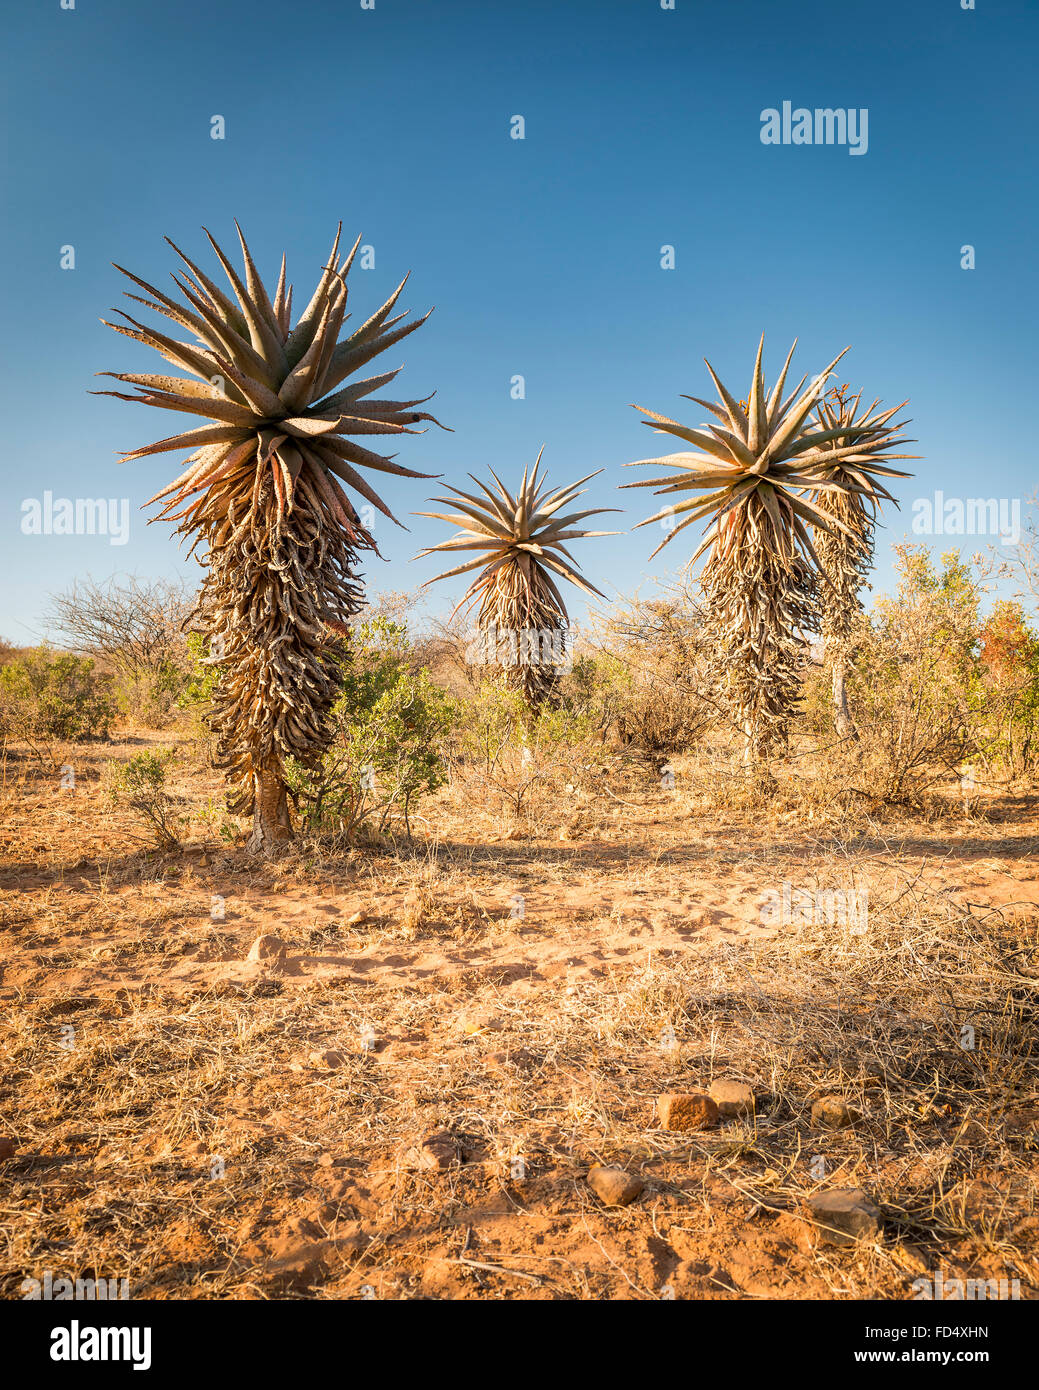 Wild growing aloe vera trees in a desert landscape in Botswana, Africa Stock Photo